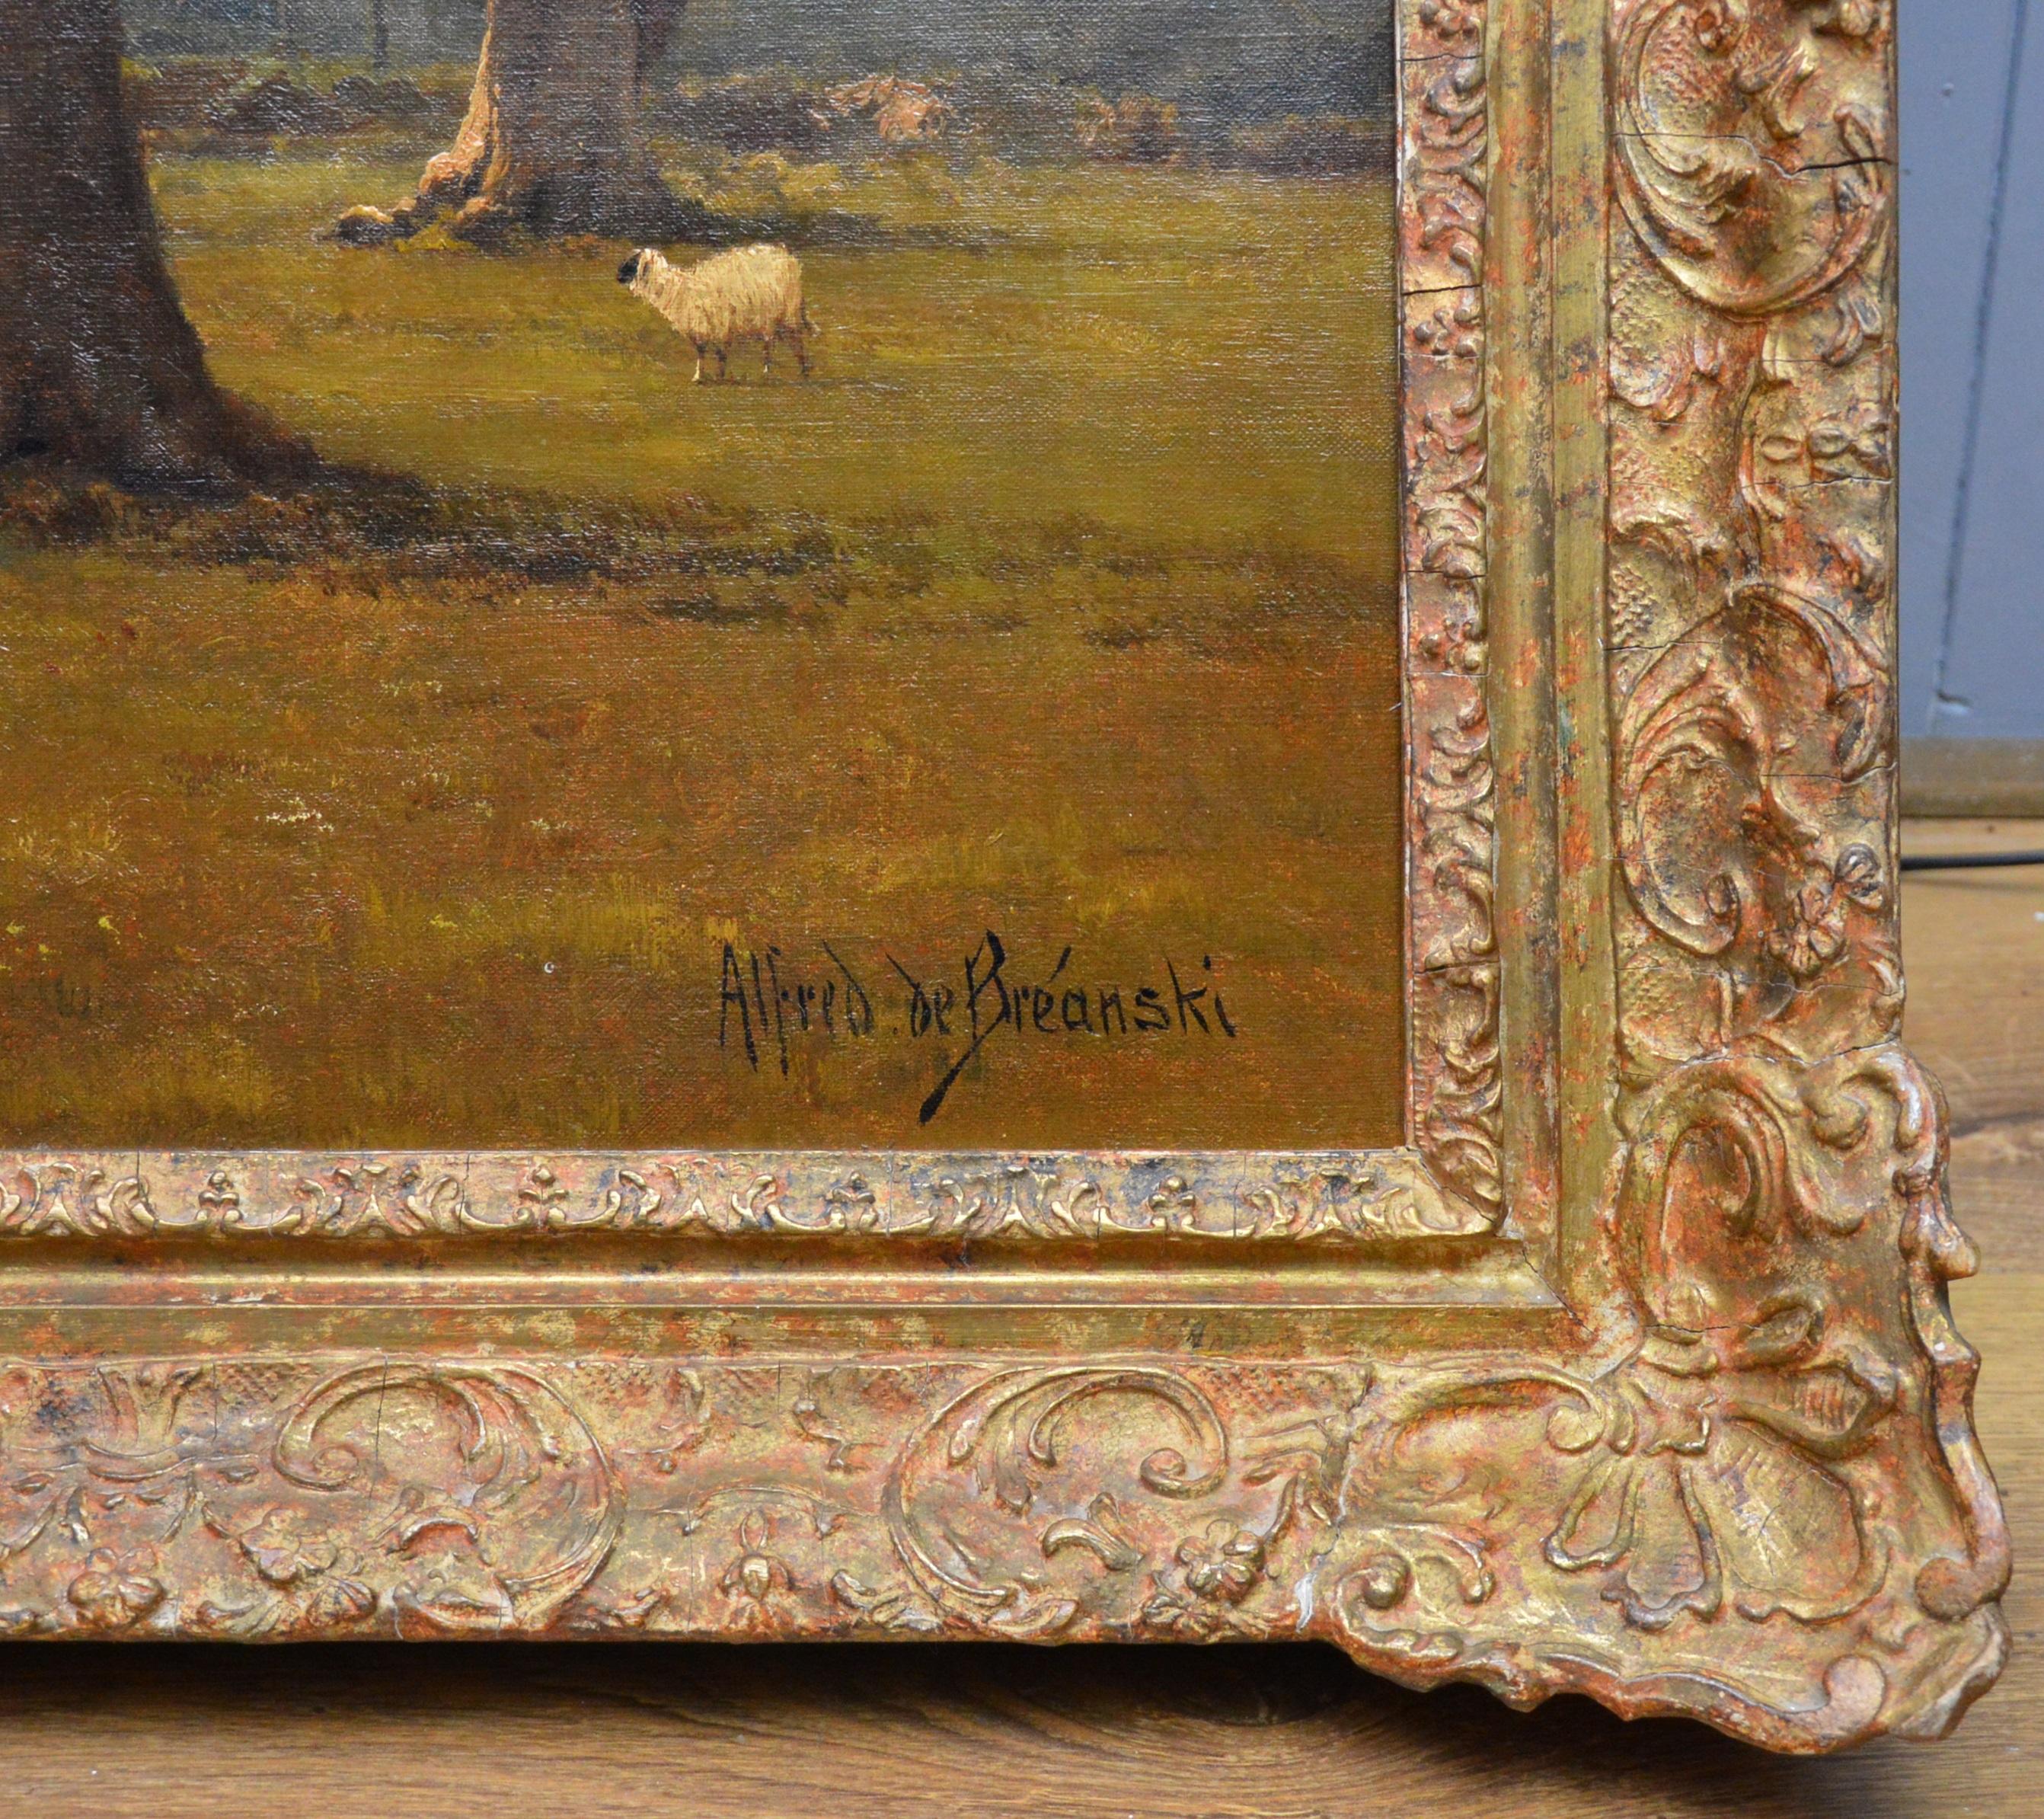 Berkshire Homestead - 19th Century English Landscape Oil Painting - de Breanski 6